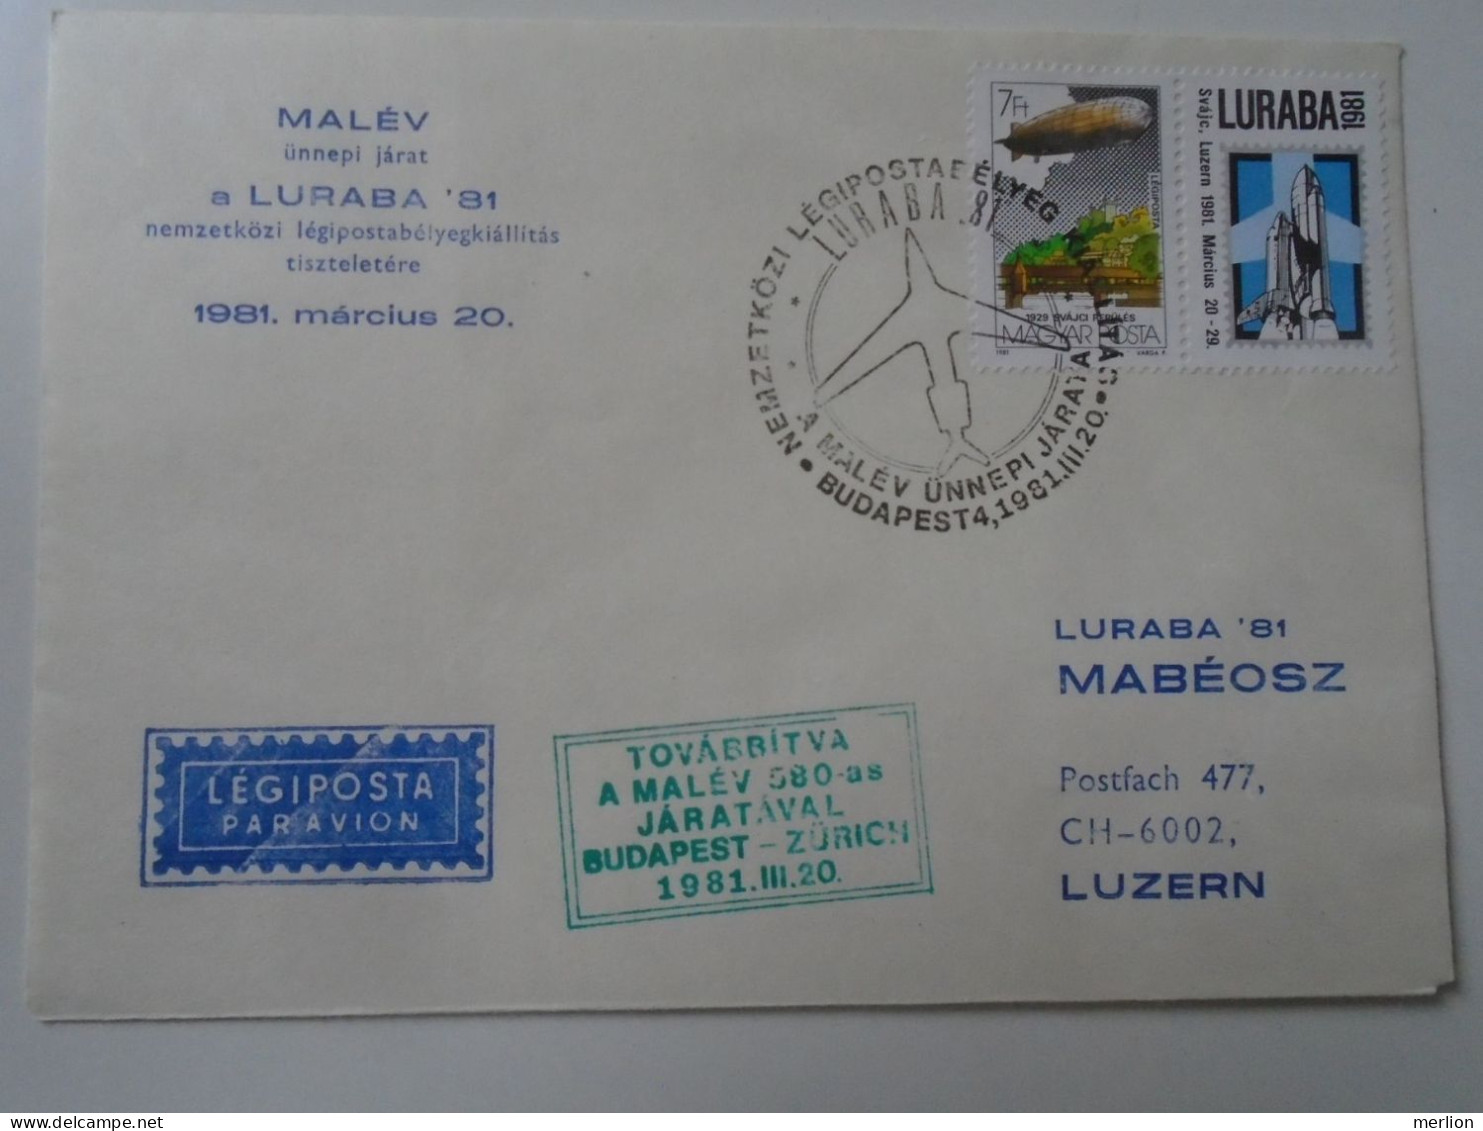 ZA443.26 Hungary  - MALÉV  Holiday Flight  -LURABA'81  Switzerland,  Luzern  -Budapest -Zürich  MA580 Flight - Lettres & Documents